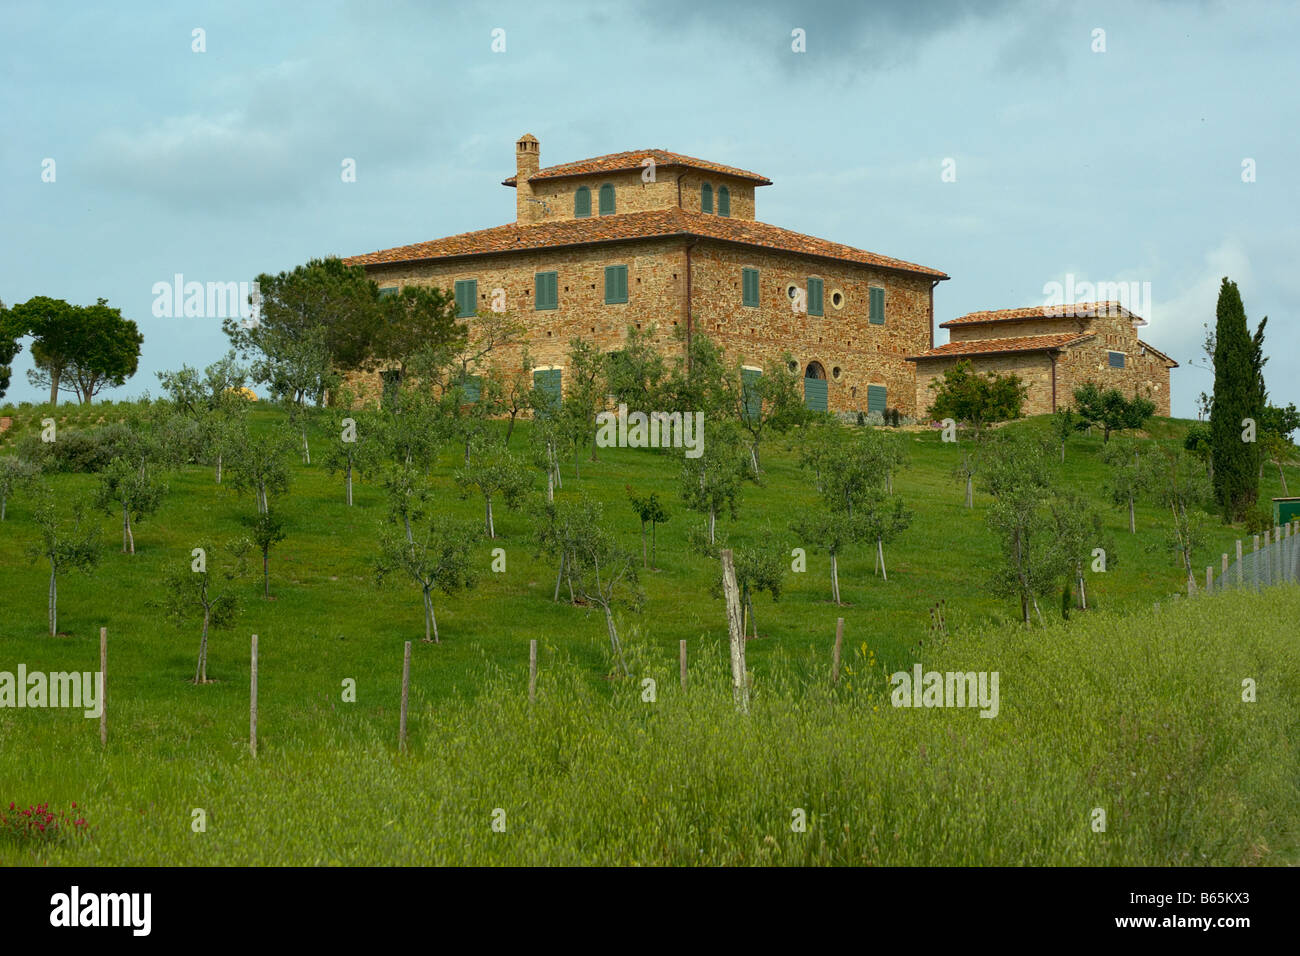 House in tuscany Stock Photo